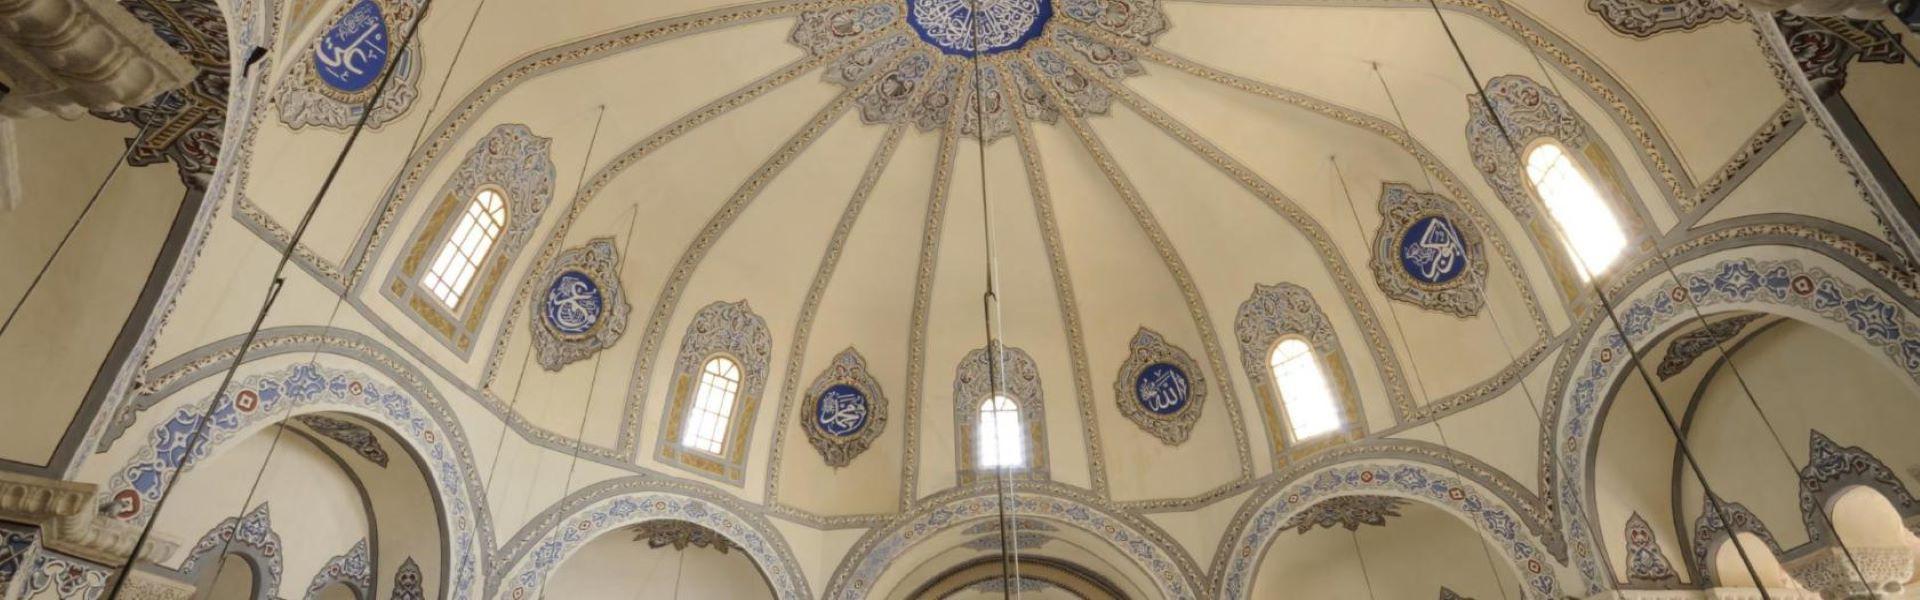 مسجد ایاصوفیه کوچک استانبول Kcuk Aya Sofya Istanbul